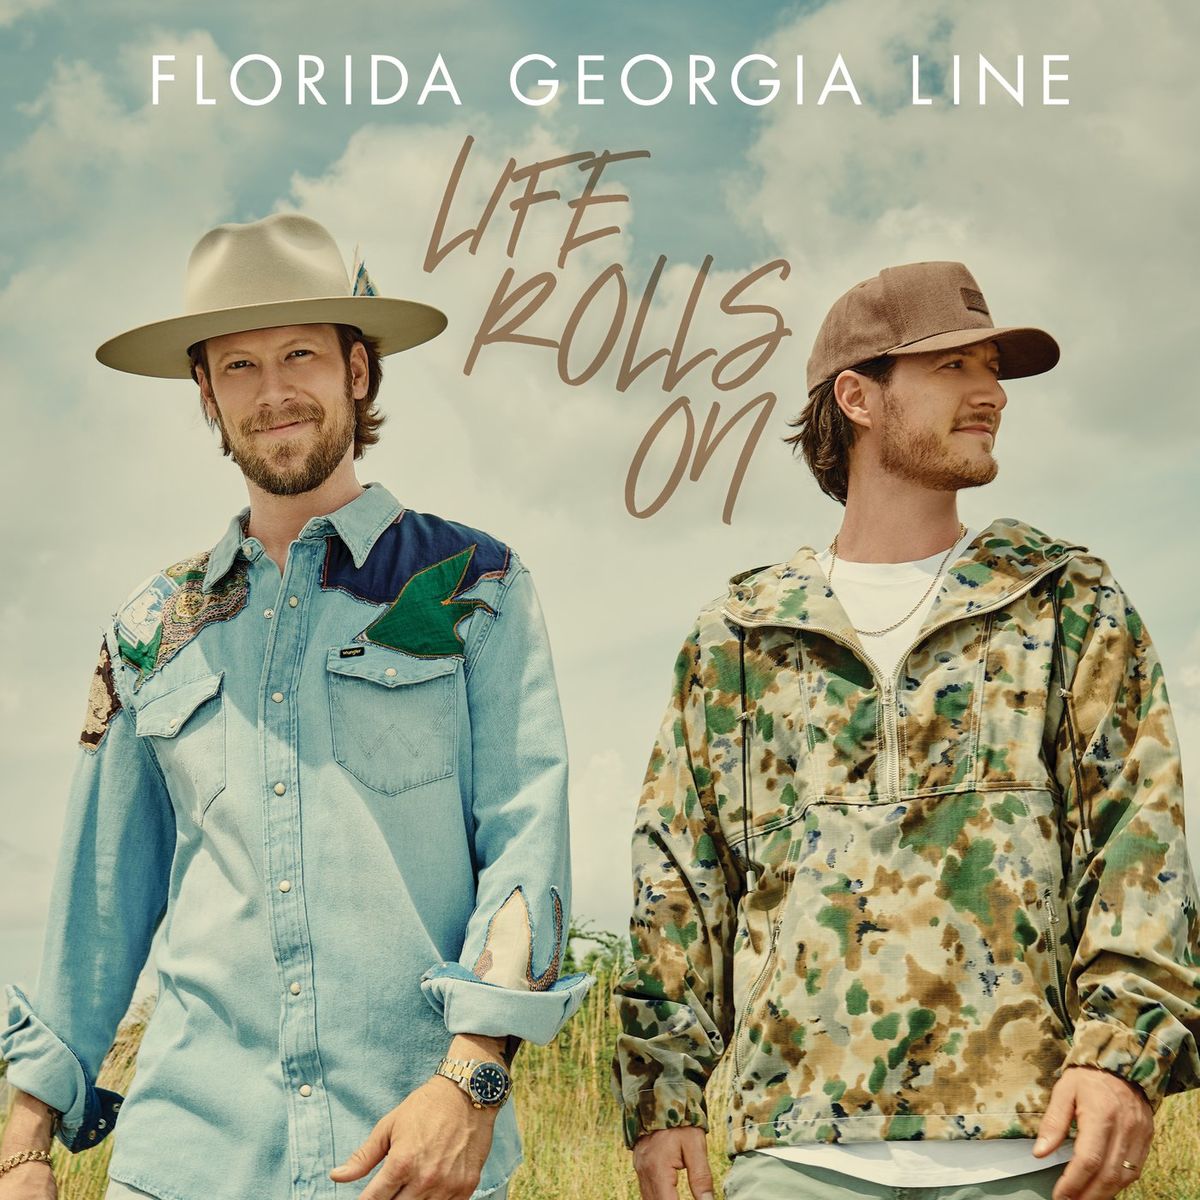 Florida Georgia Line - Always Gonna Love You